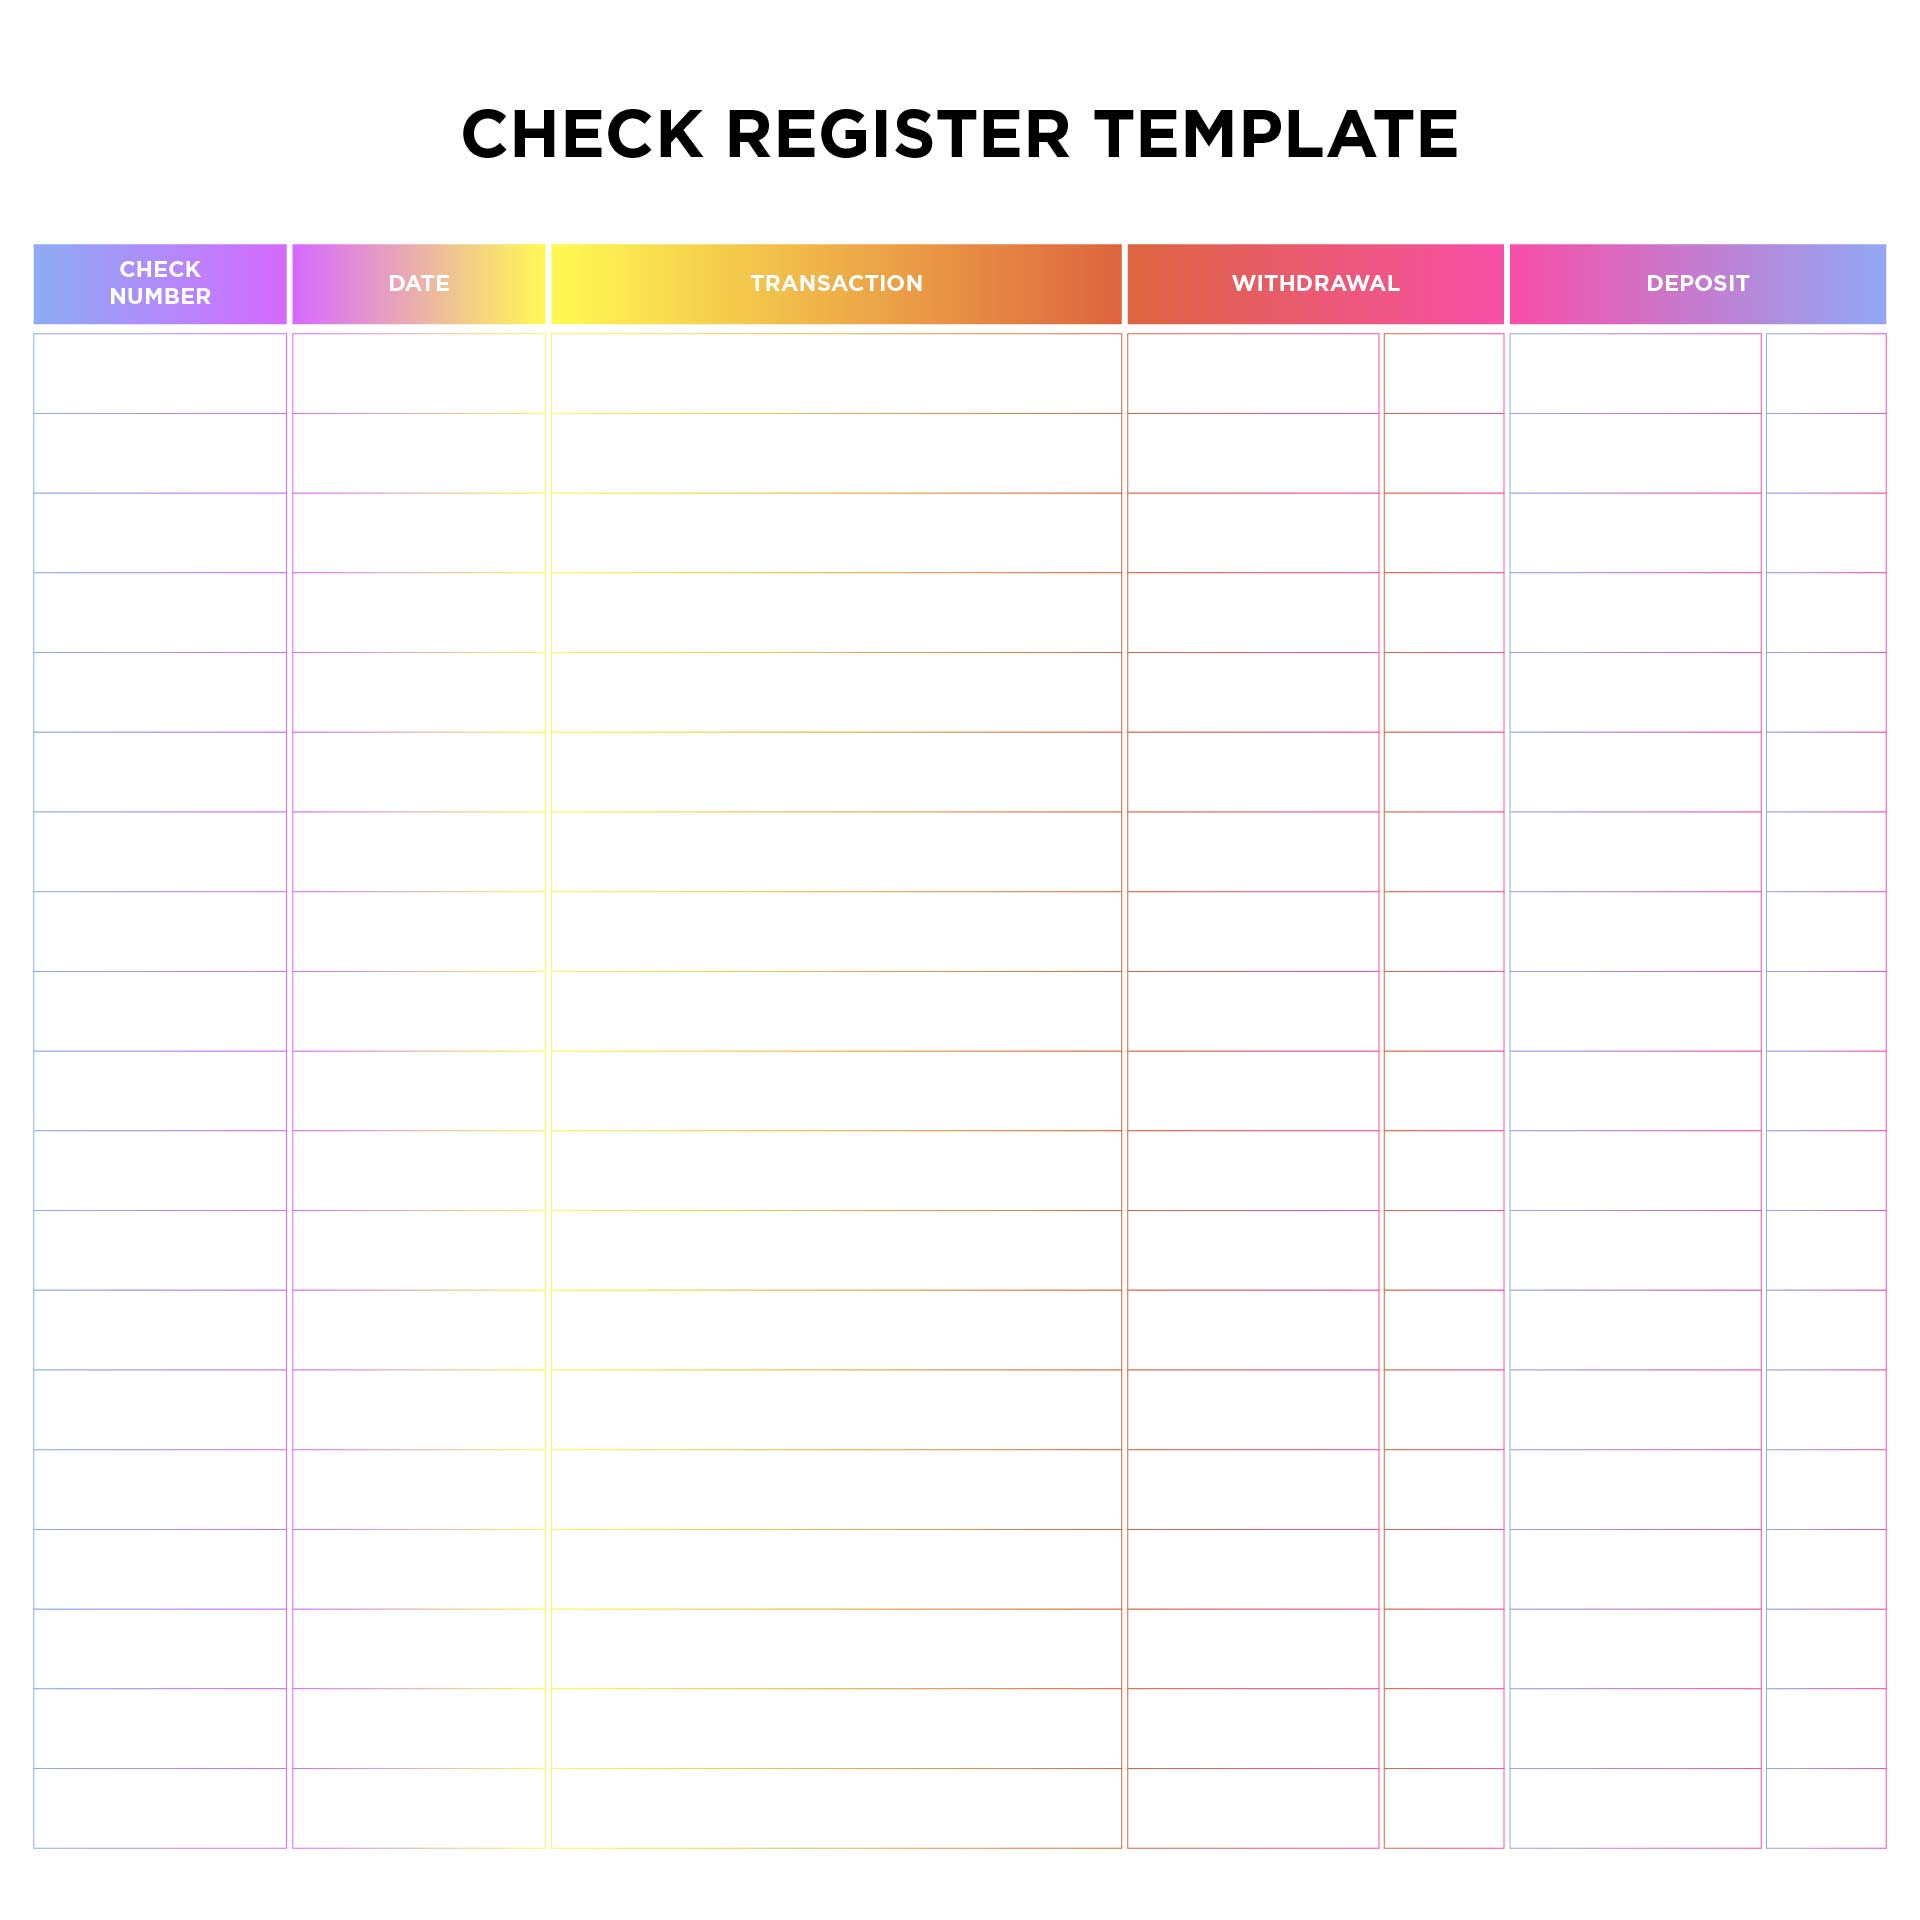 microsoft printable excel horizontal checkbook register template